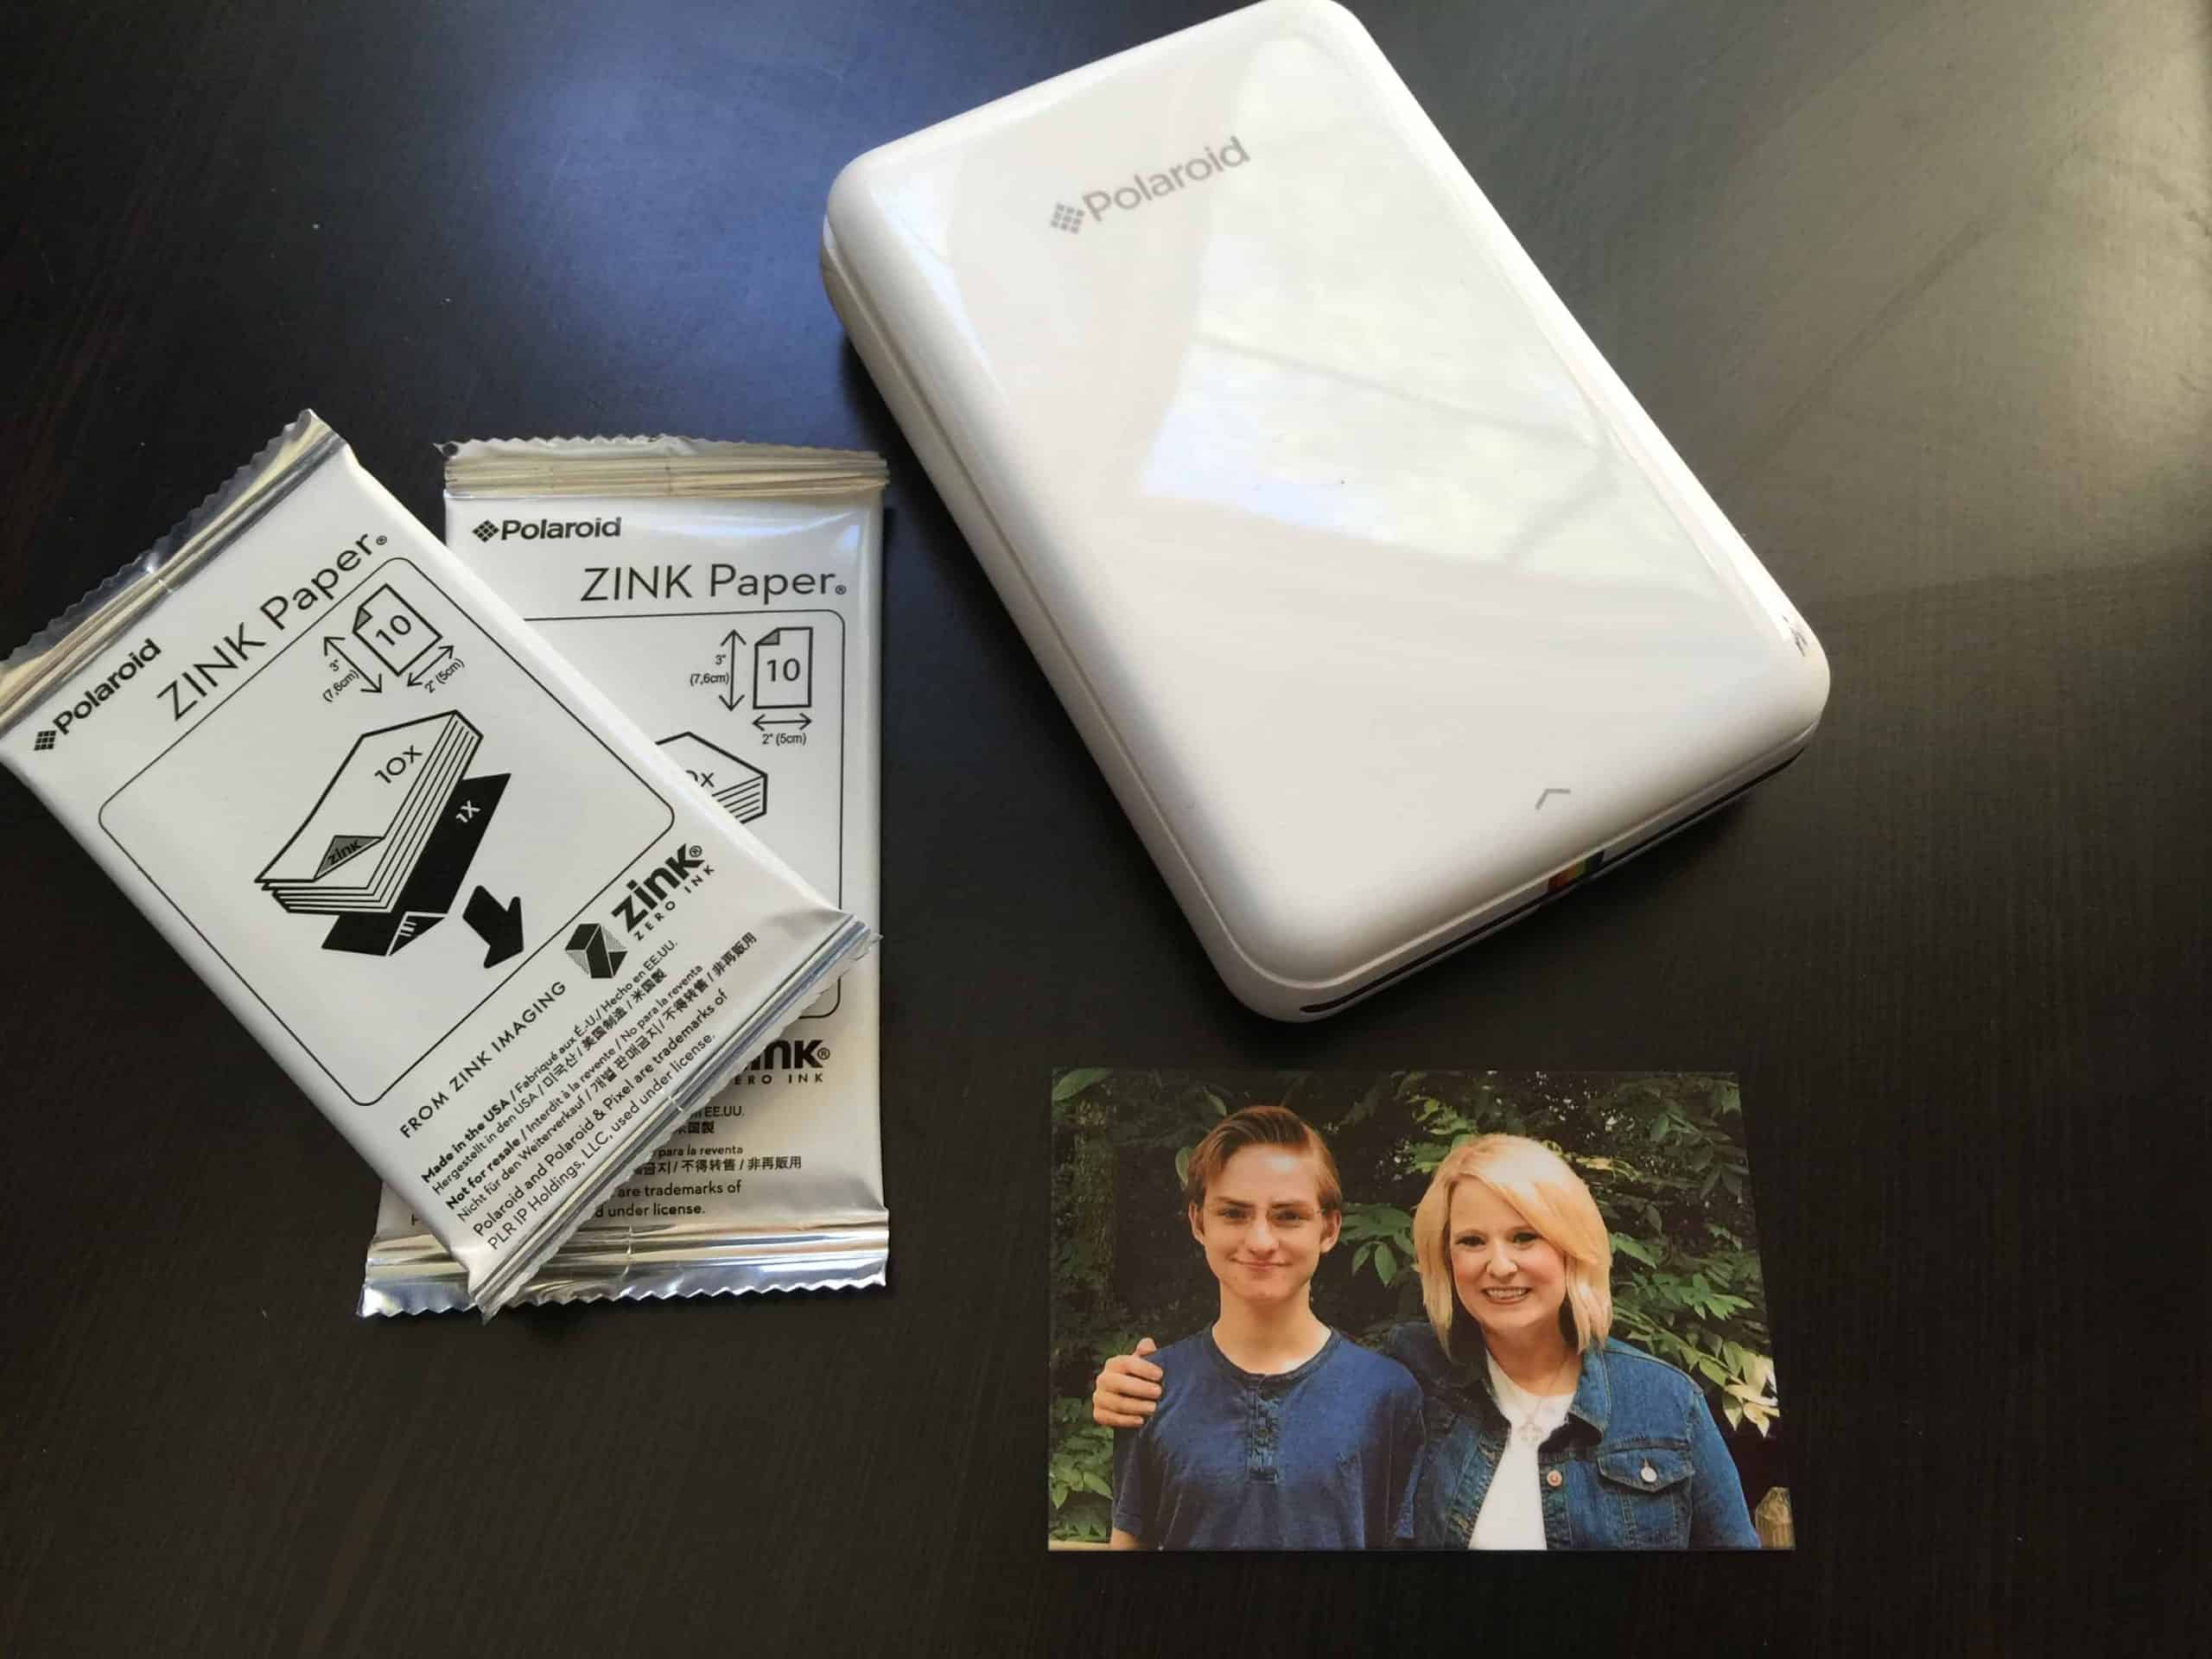 Polaroid Zip Mobile Photo Printer Review and Demo